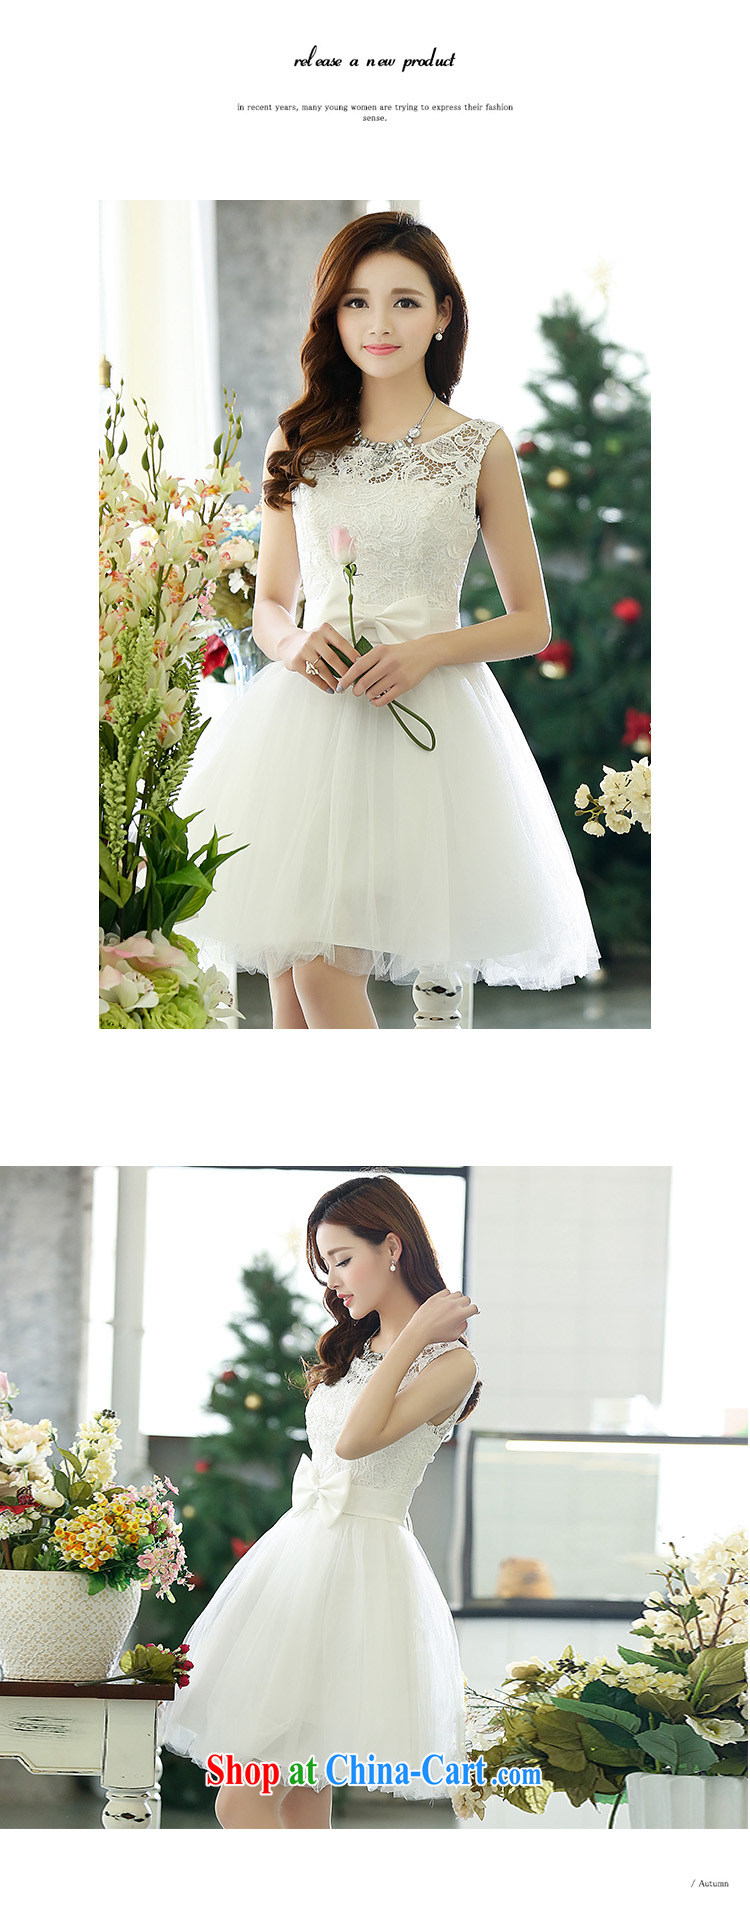 dress korea online shop